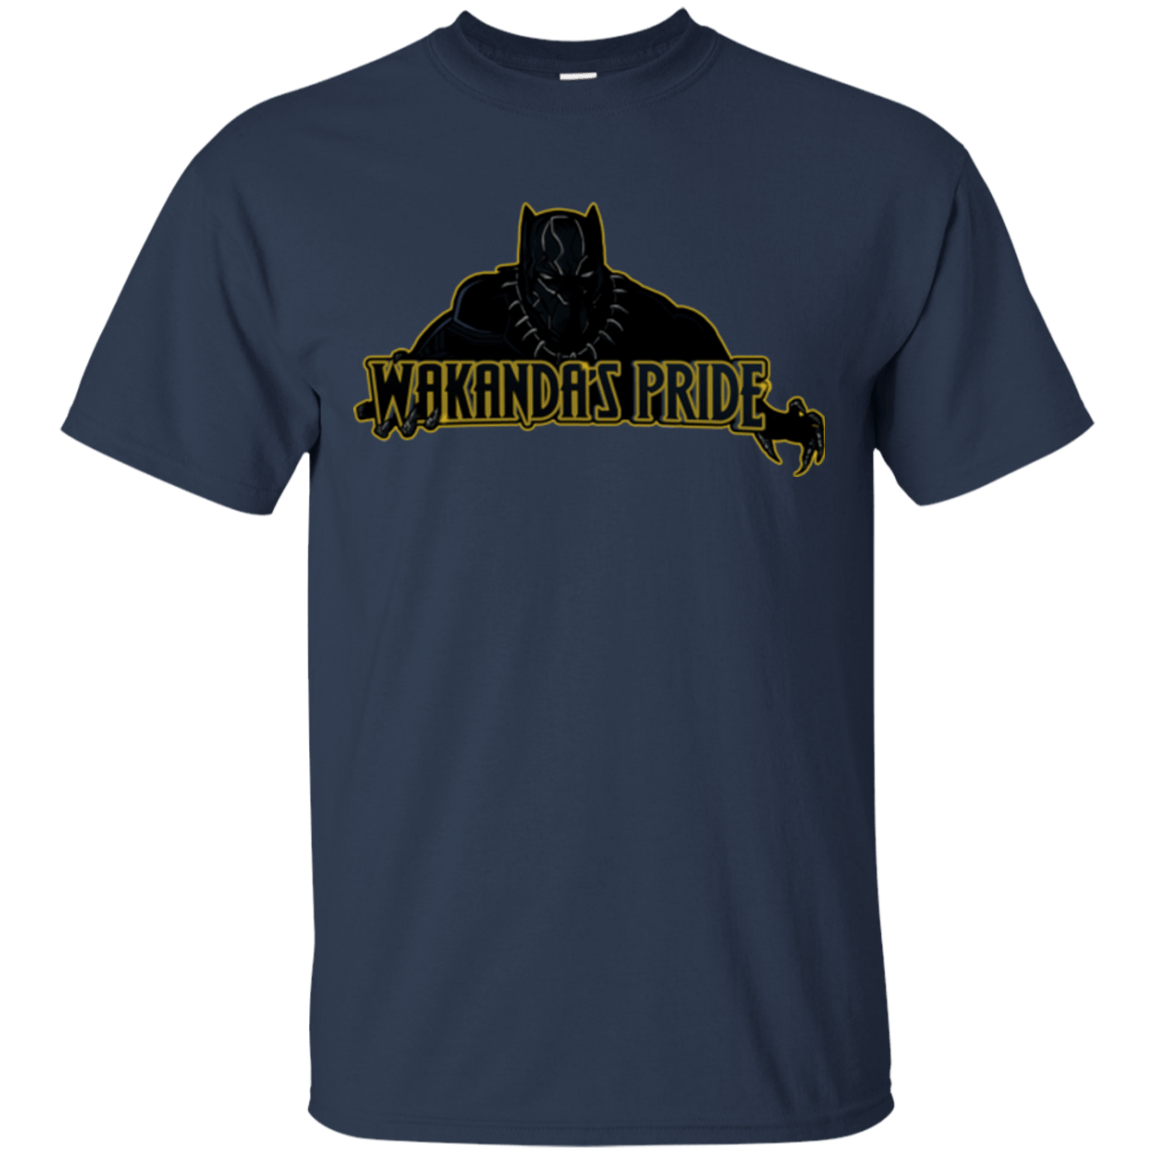 T-Shirts Navy / S Wakandas Pride T-Shirt